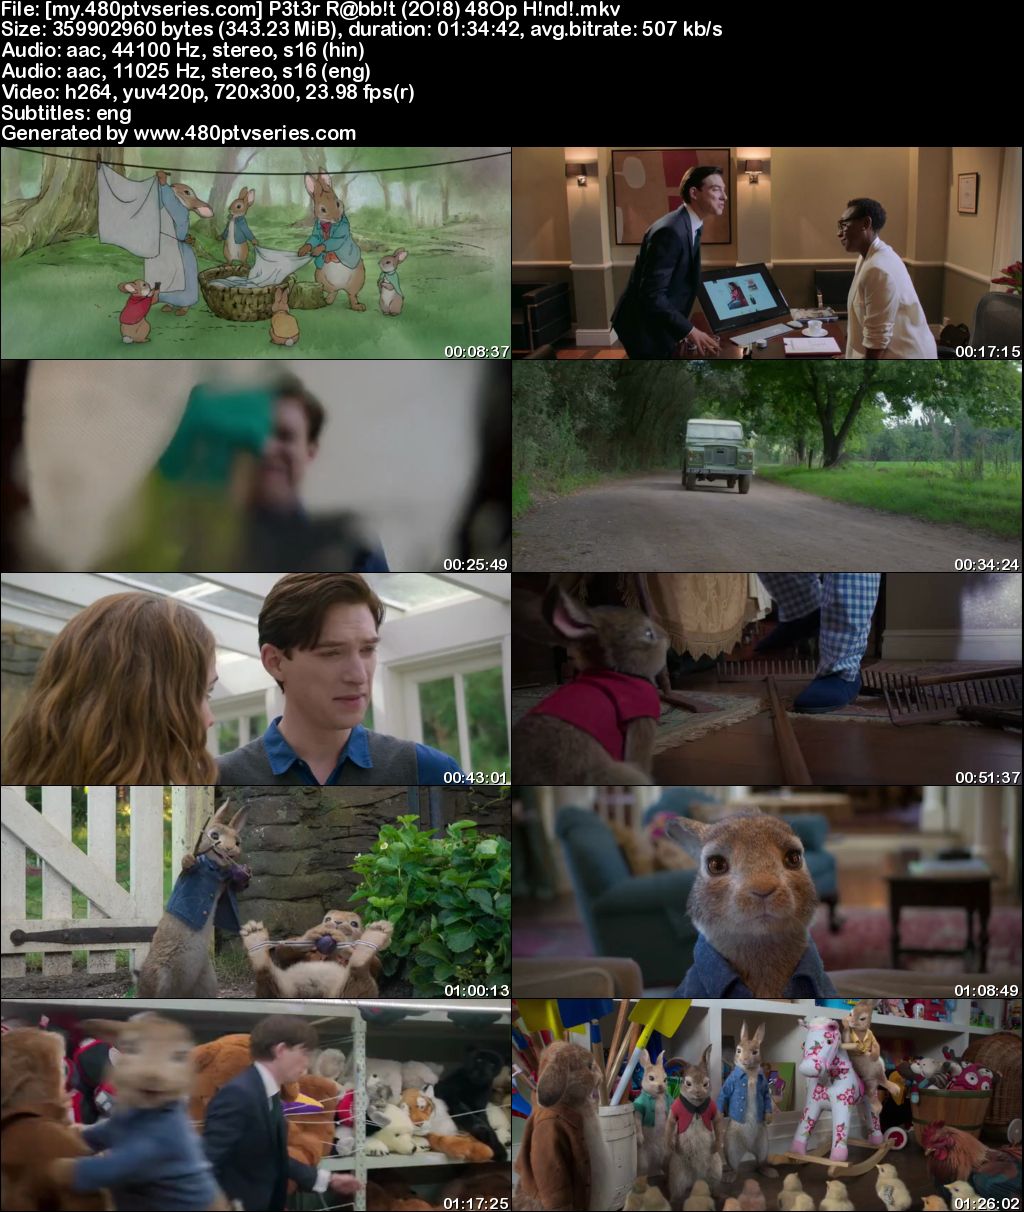 Peter Rabbit (2018) 350MB Full Hindi Dual Audio Movie Download 480p Bluray Free Watch Online Full Movie Download Worldfree4u 9xmovies